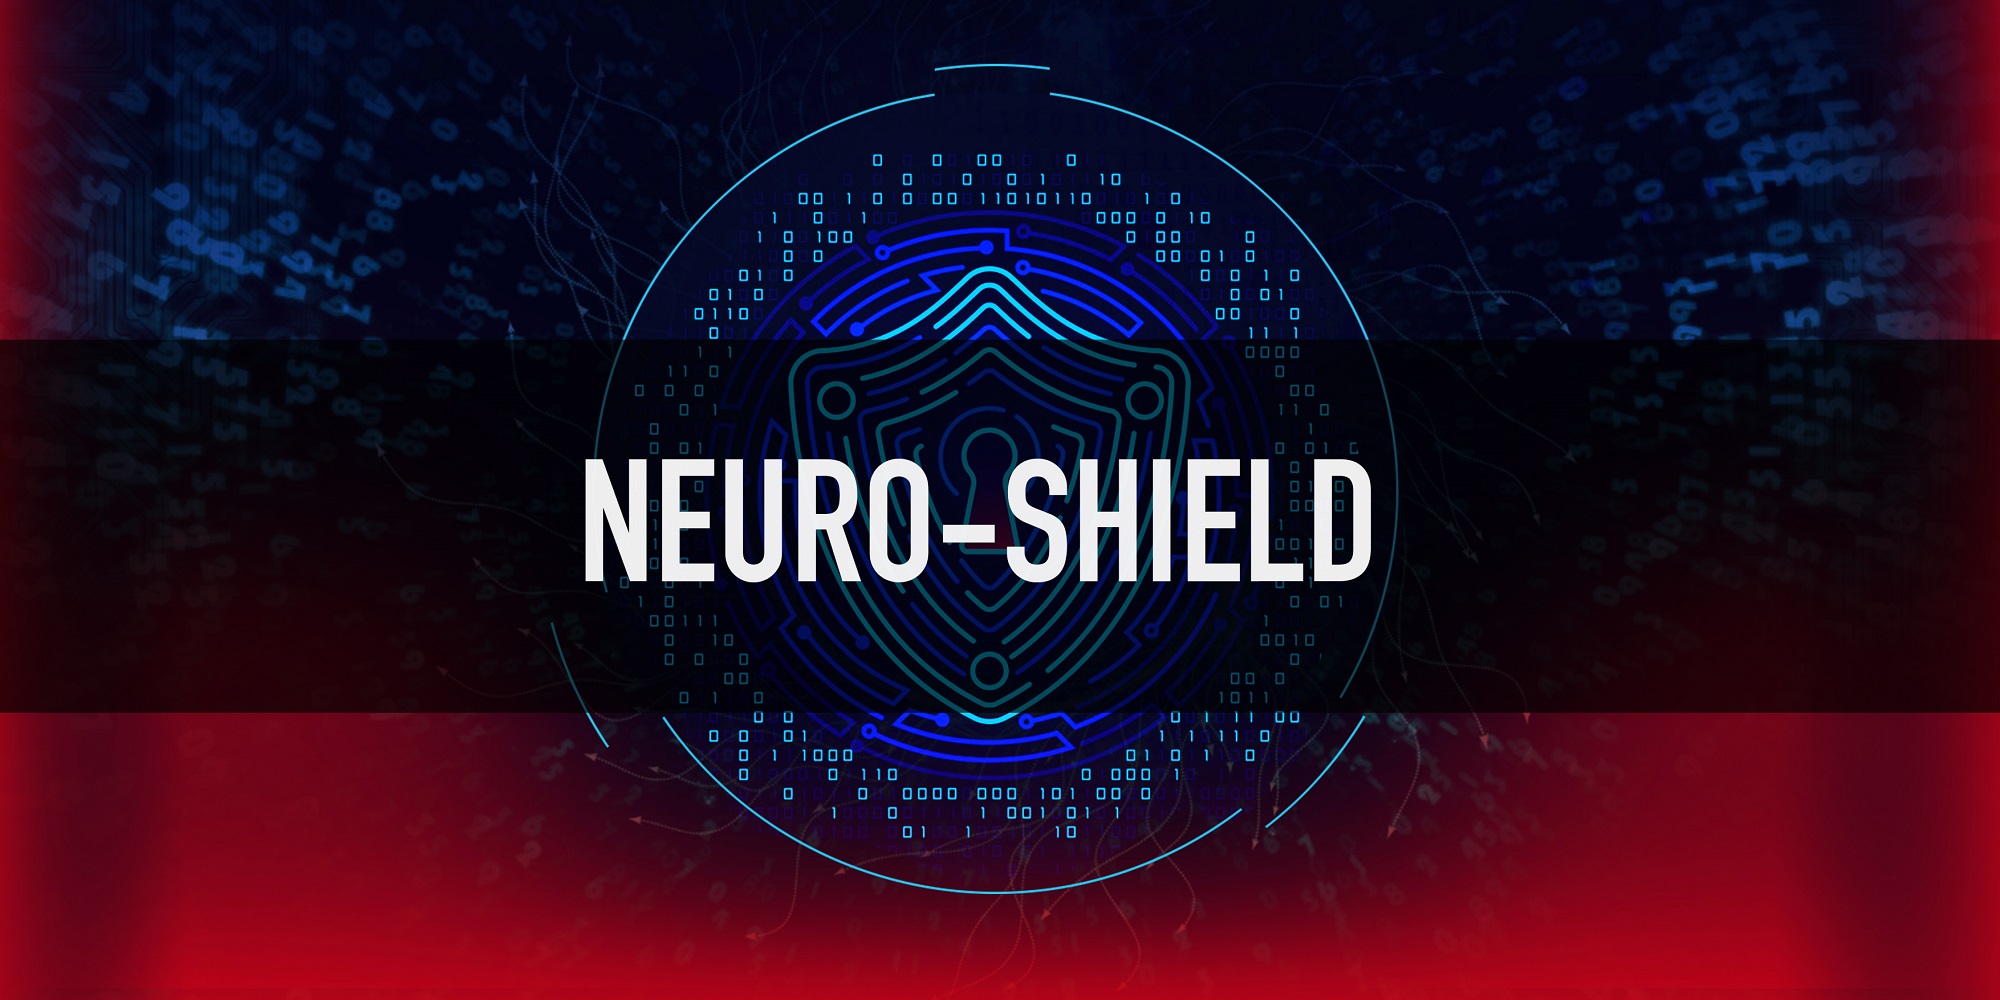 Neuro shield